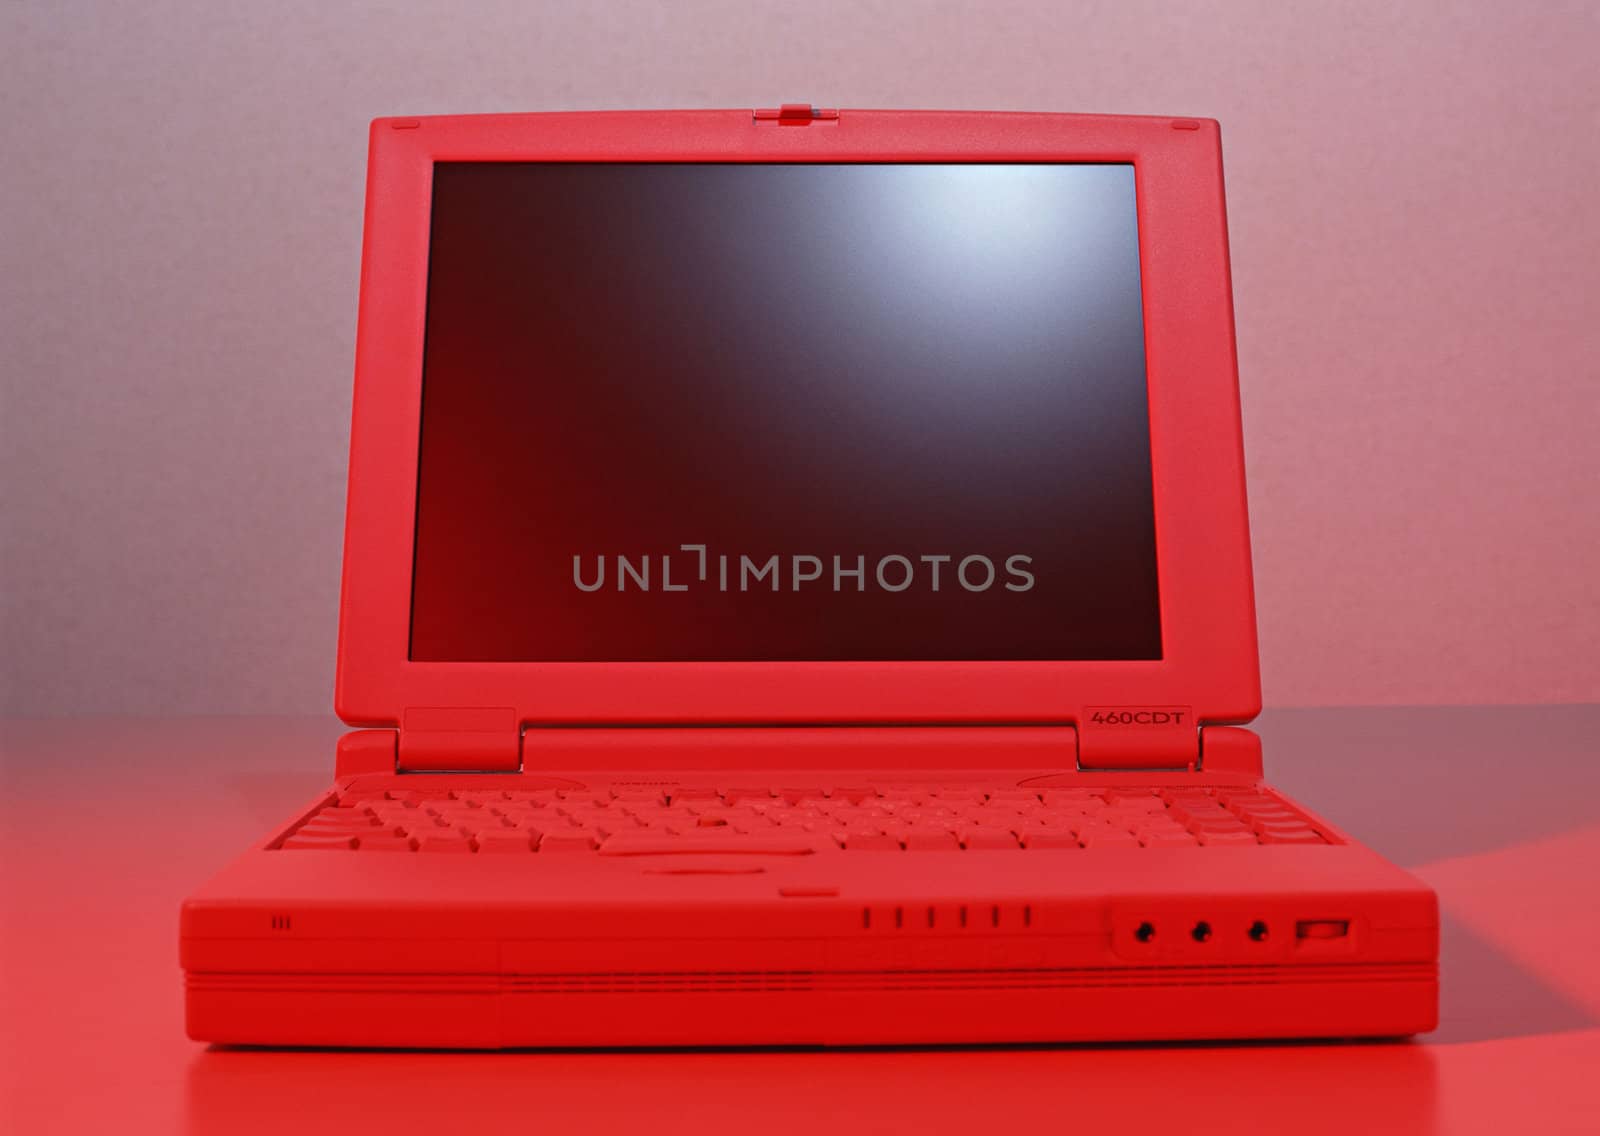 Old laptop computer by Baltus